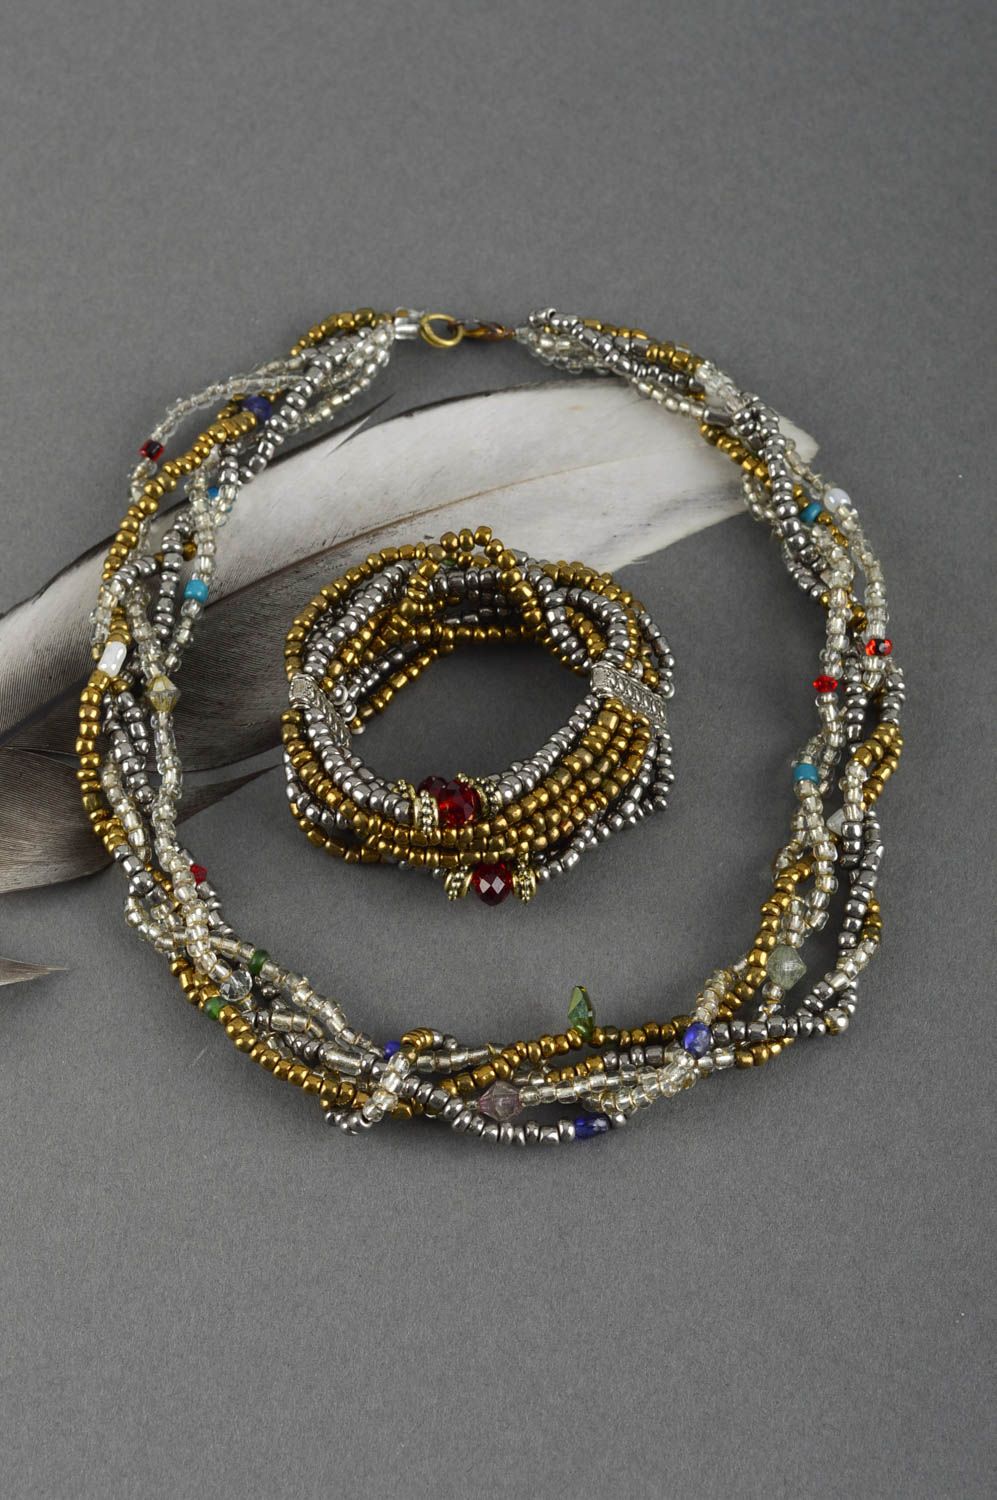 Handmade beaded necklace and bracelet designer stylish jewelry set for woman photo 1